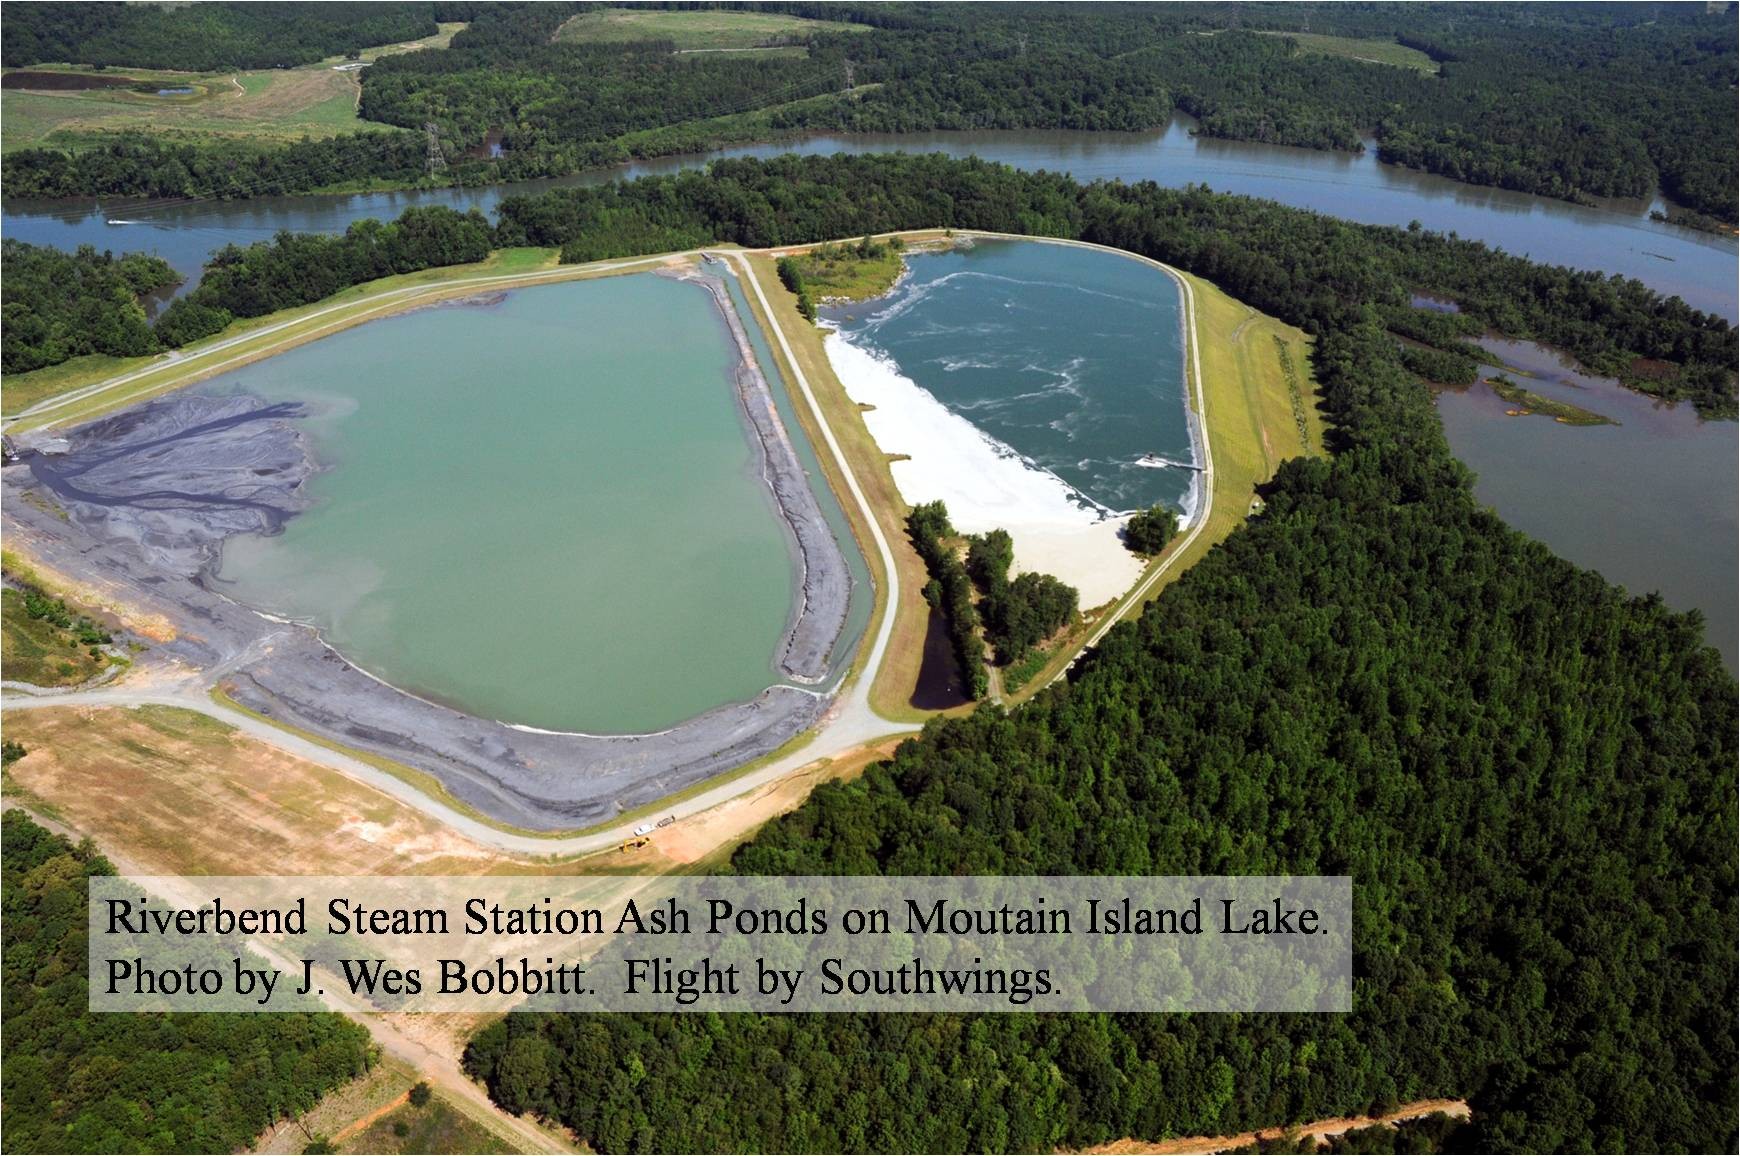 These two Duke Energy coal ash ponds drain into our drinking water, aka Mountain Island Lake.